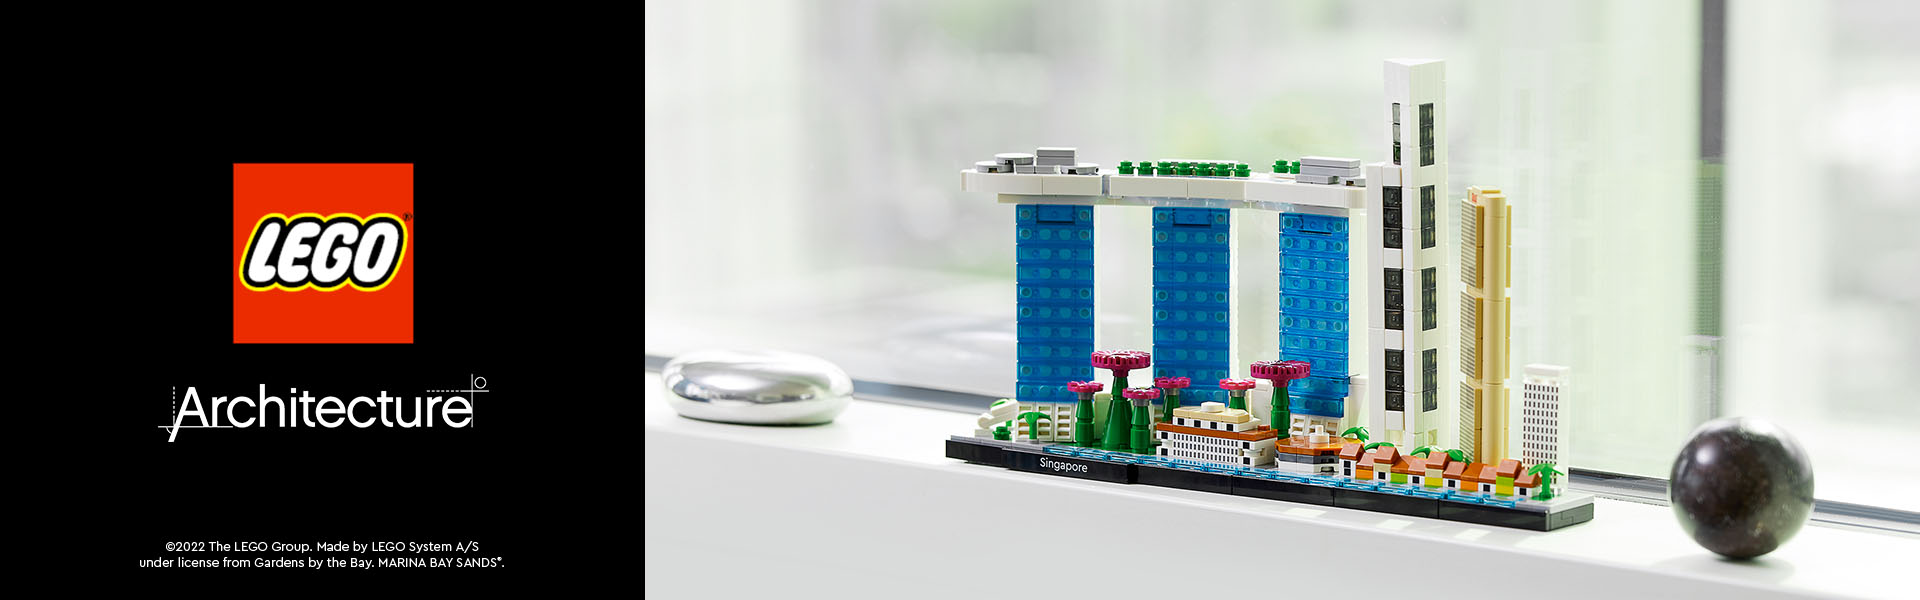 LEGO-Subbrand-header-1920x600-Architecture.jpg